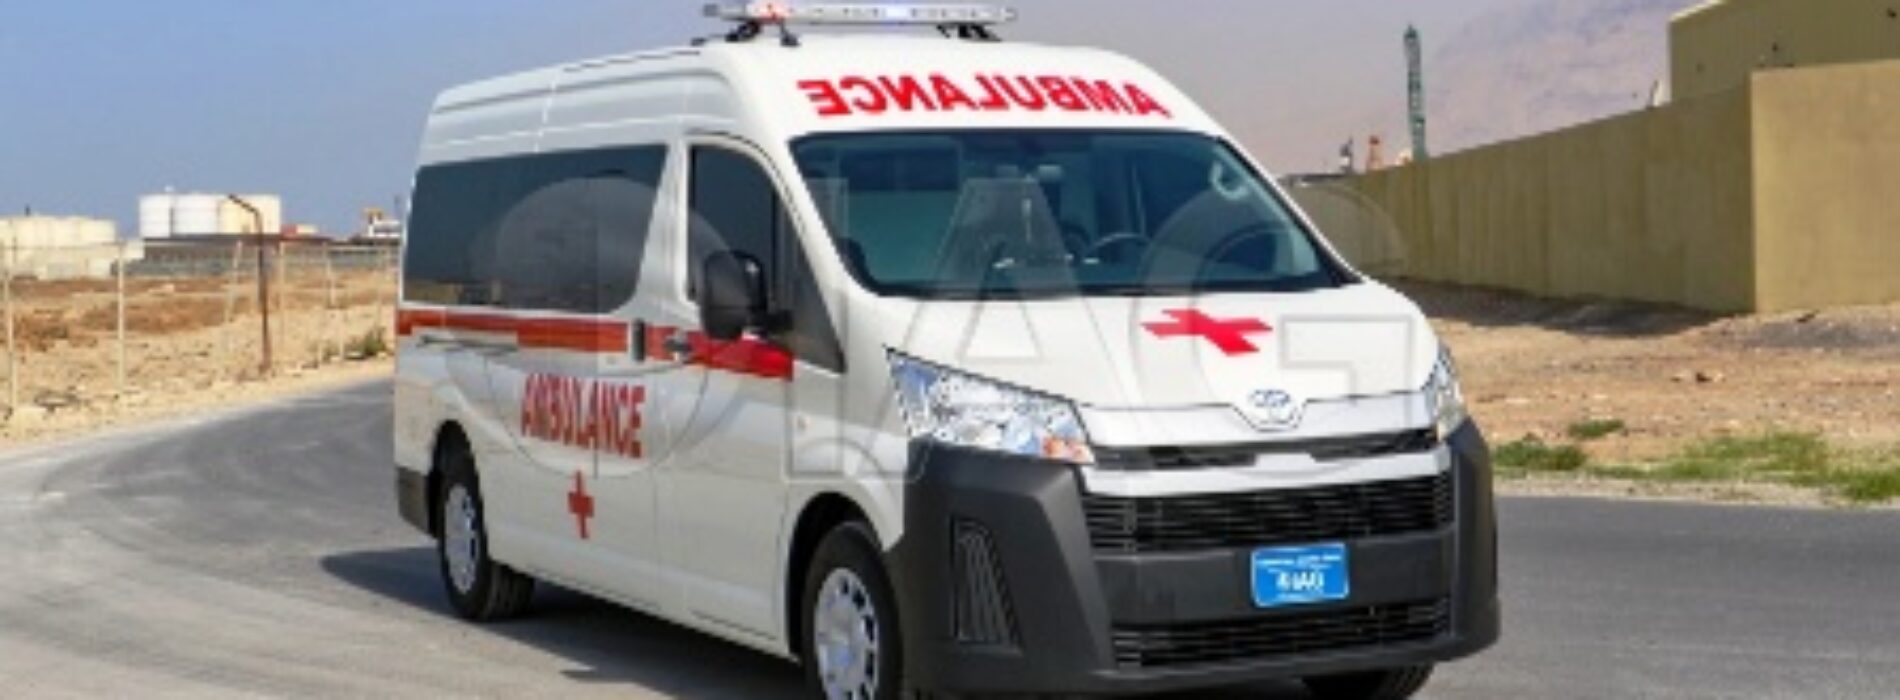 FG begins emergency ambulance service Friday